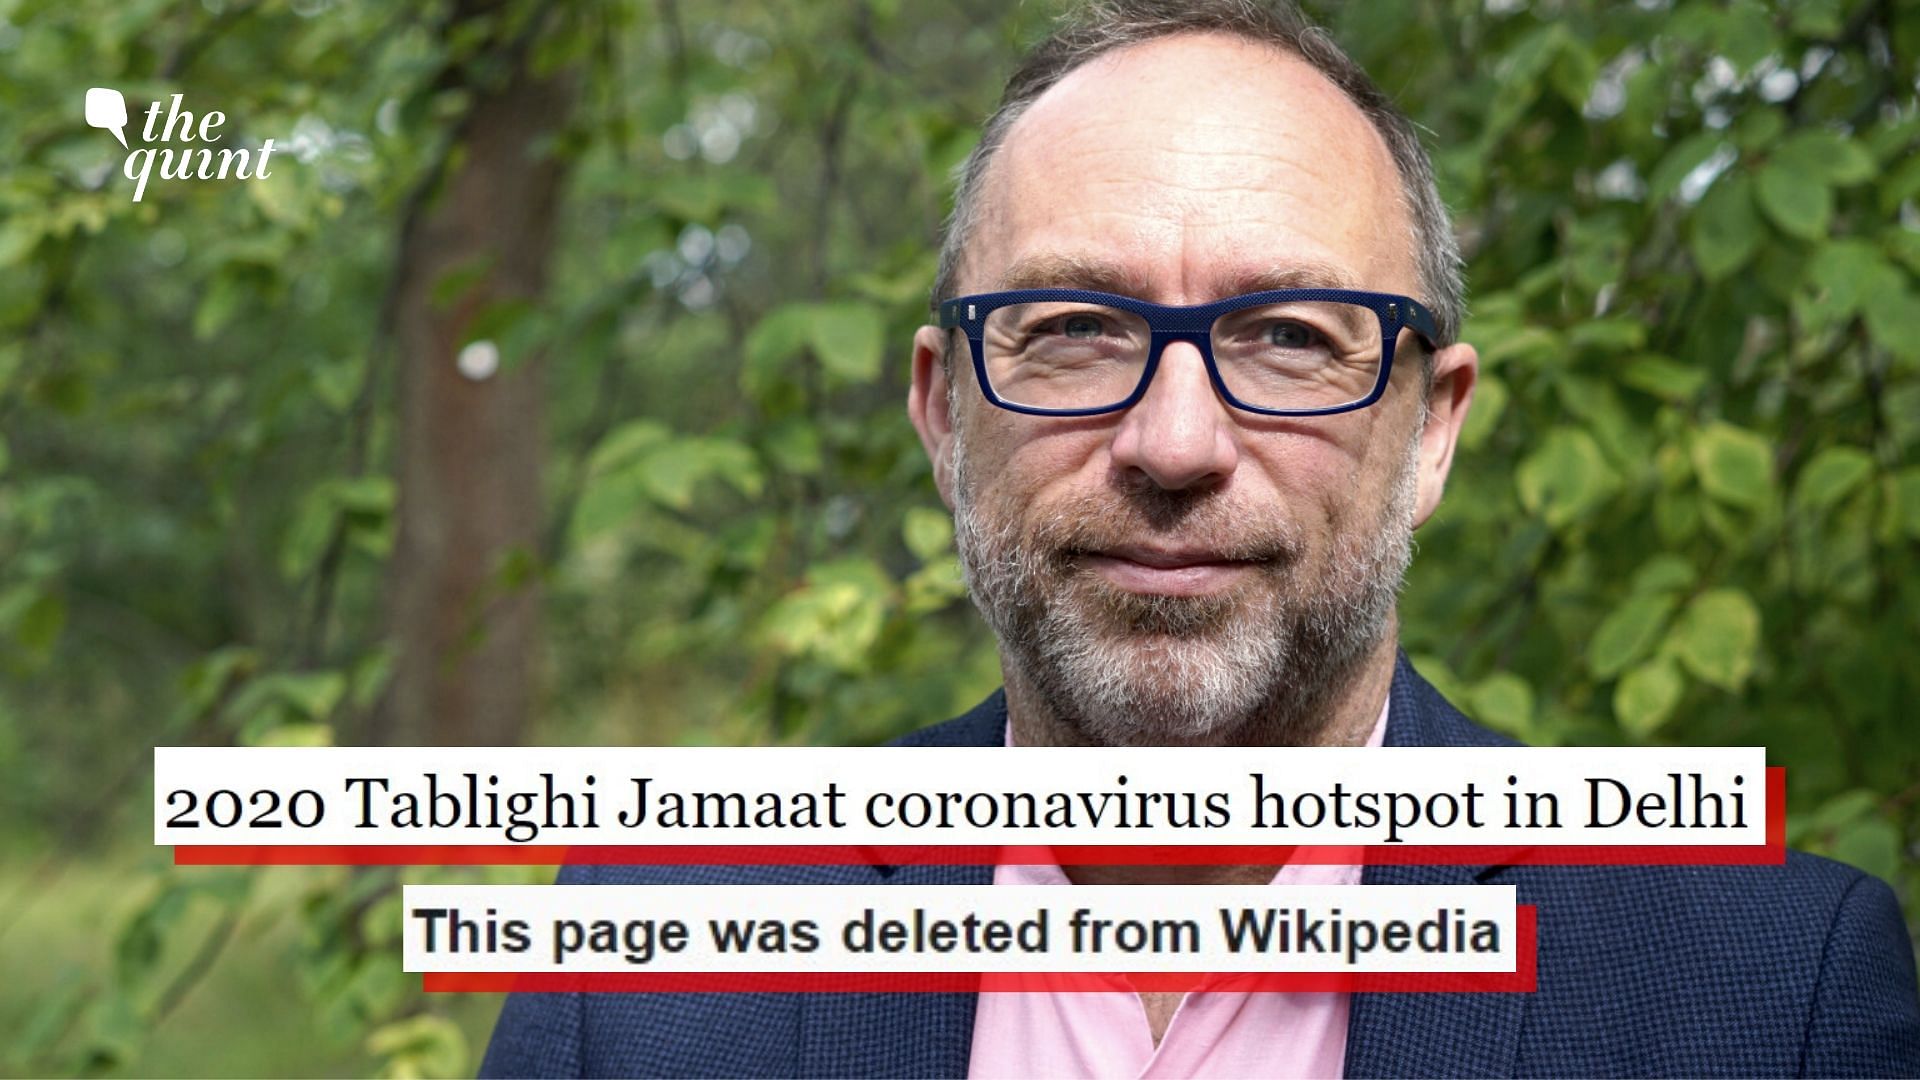  Wikipedia Founder Jimmy Wales.